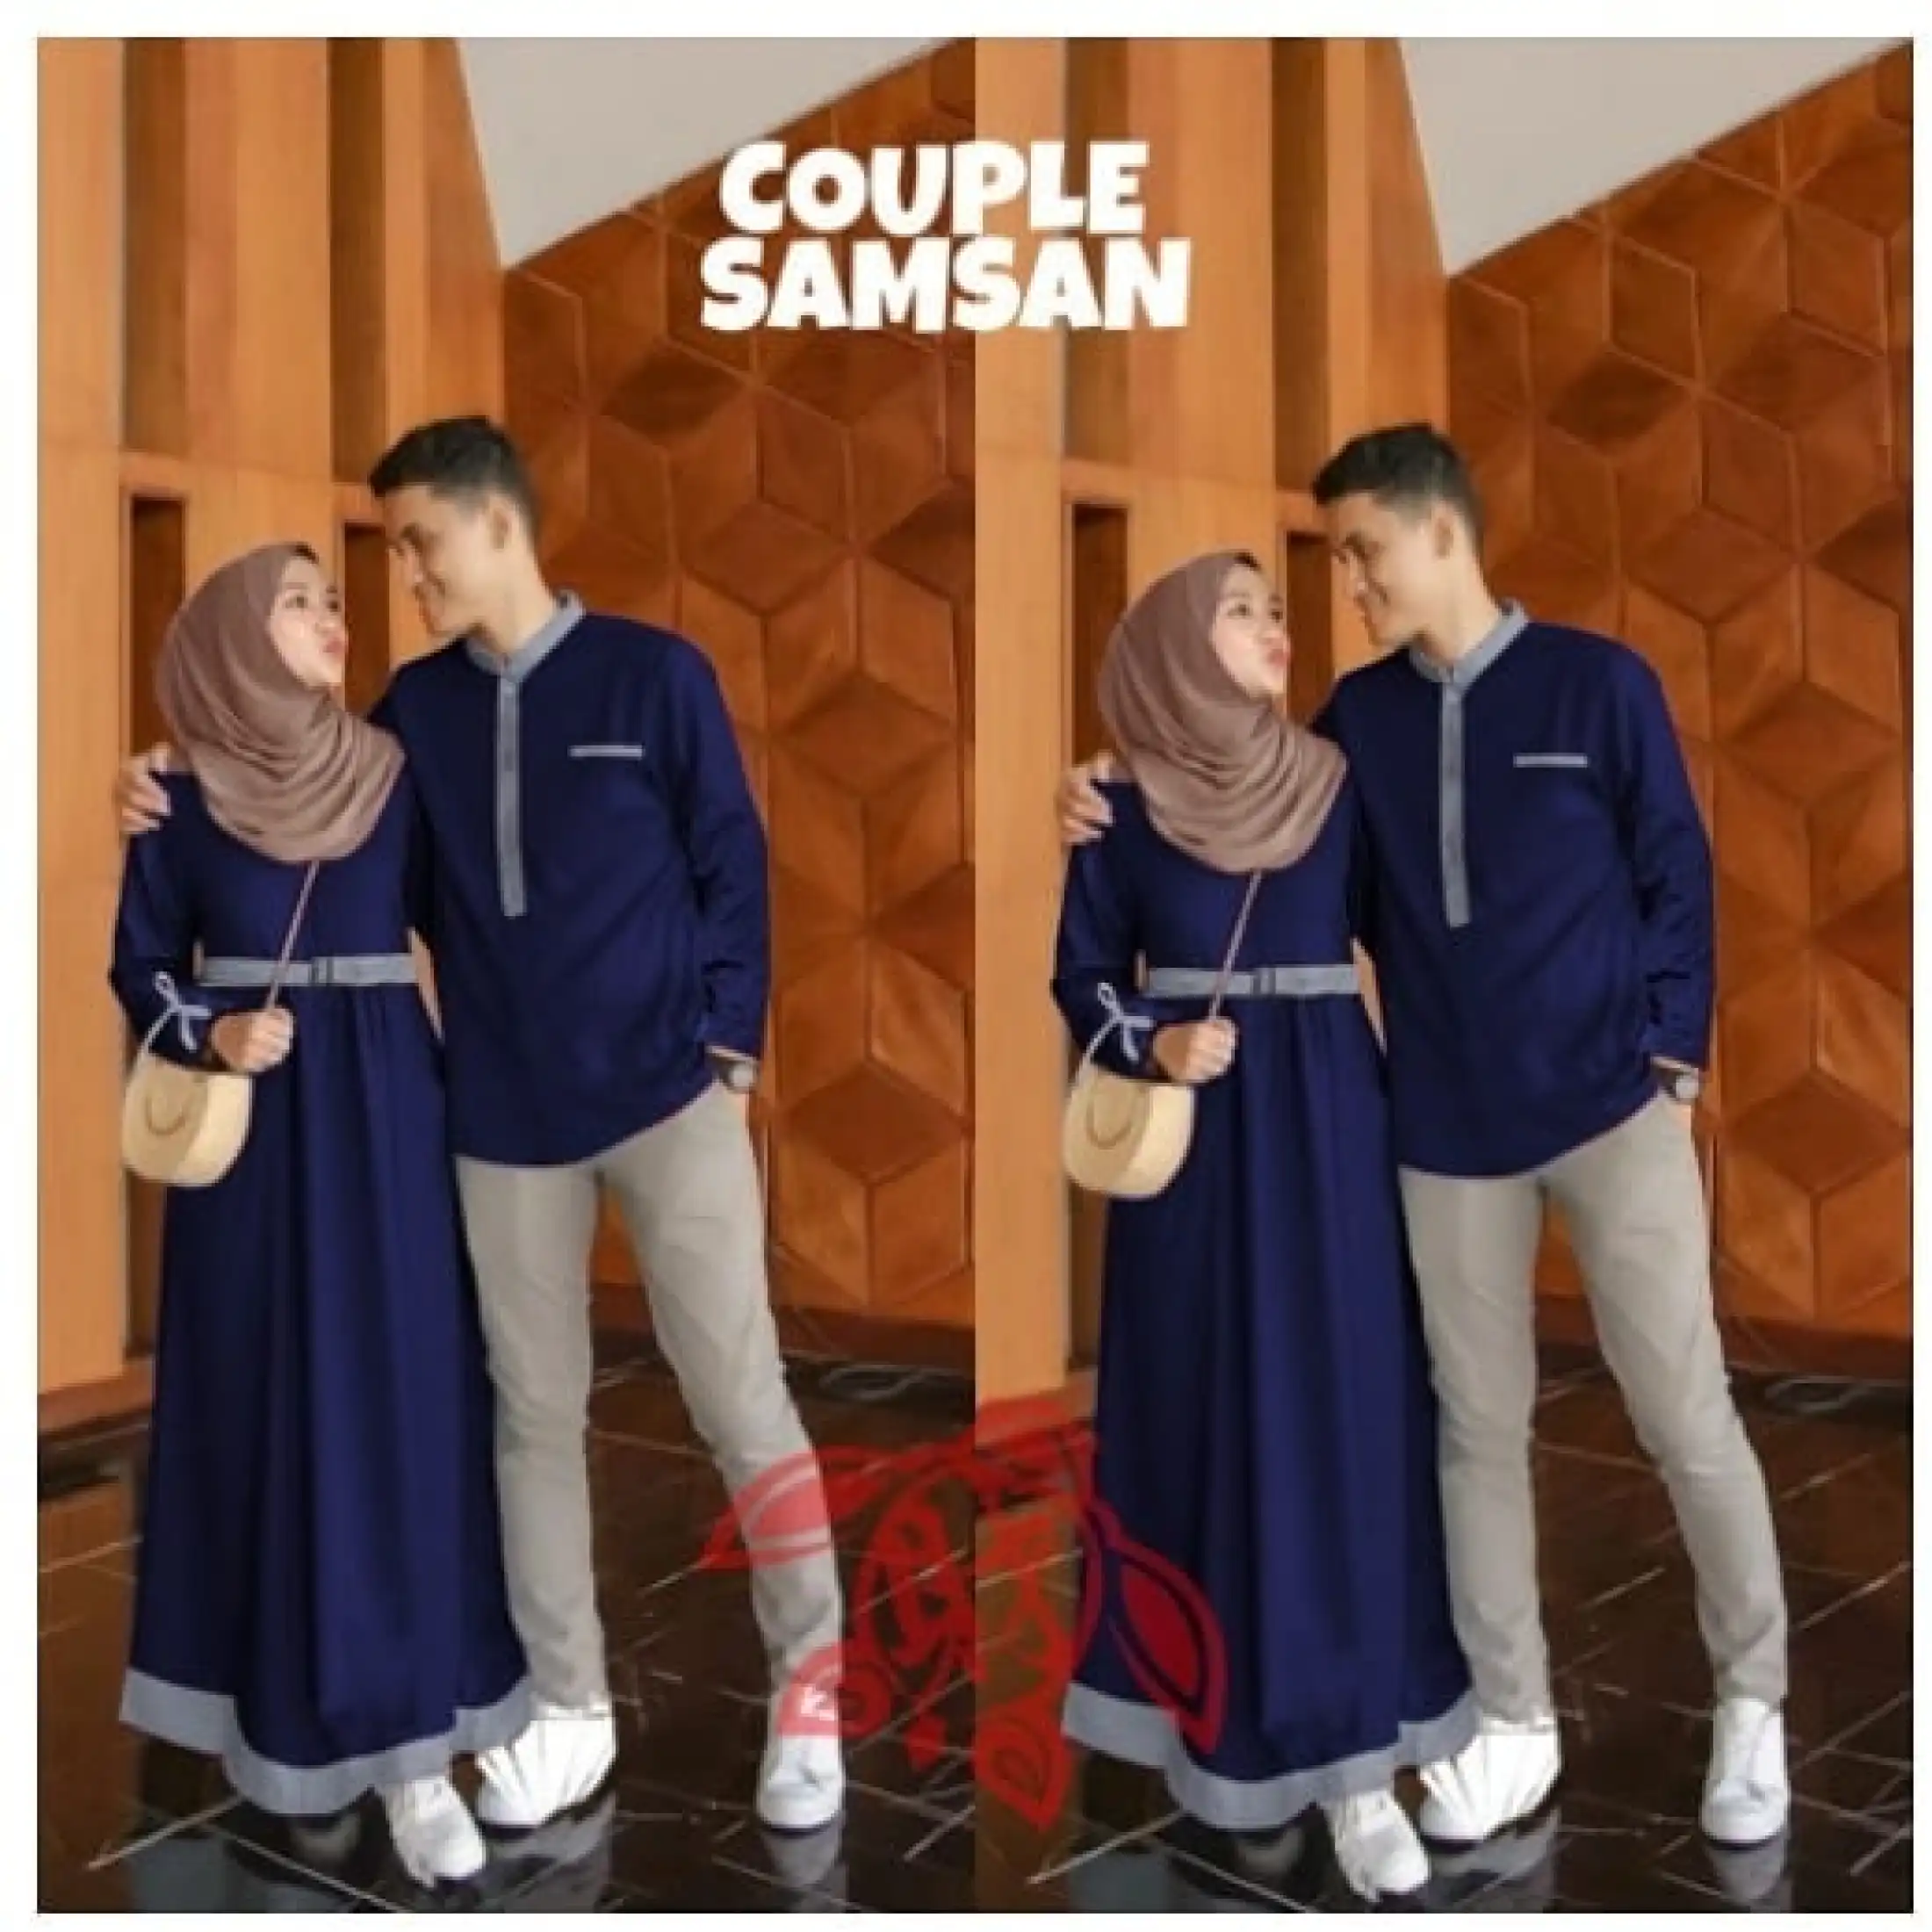 Samsam Couple Baju Couple Baju Couple Pasangan Baju Muslim Couple Lebaran Baju Couple Kondangan Baju Couple Pasangan Terbaru 2021 Gamis Couple Koko Gamis Terbaru 2021